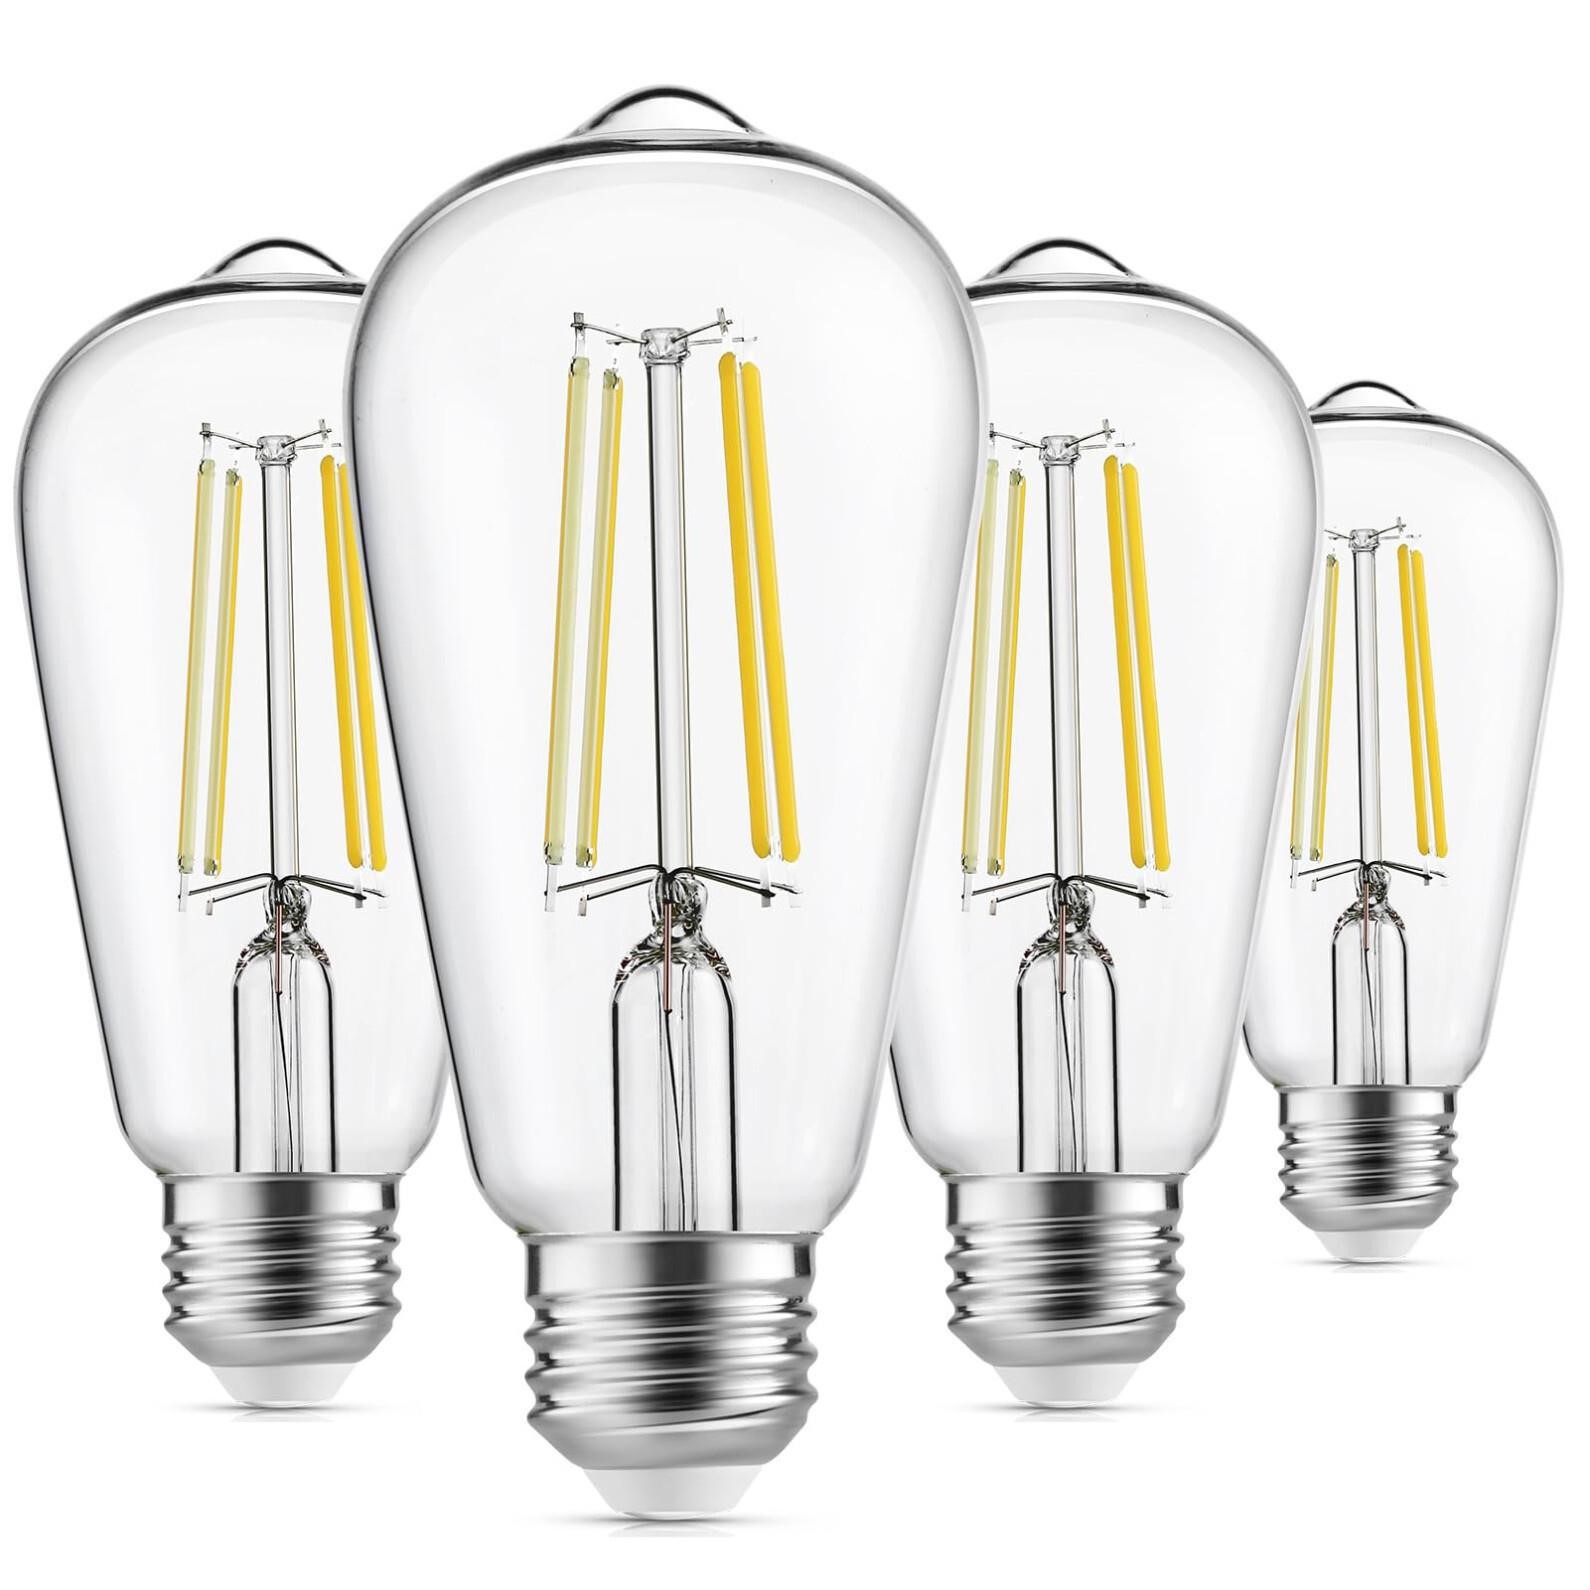 Gozelux Edison Light Bulbs 60W Equivalent, Dimmabl